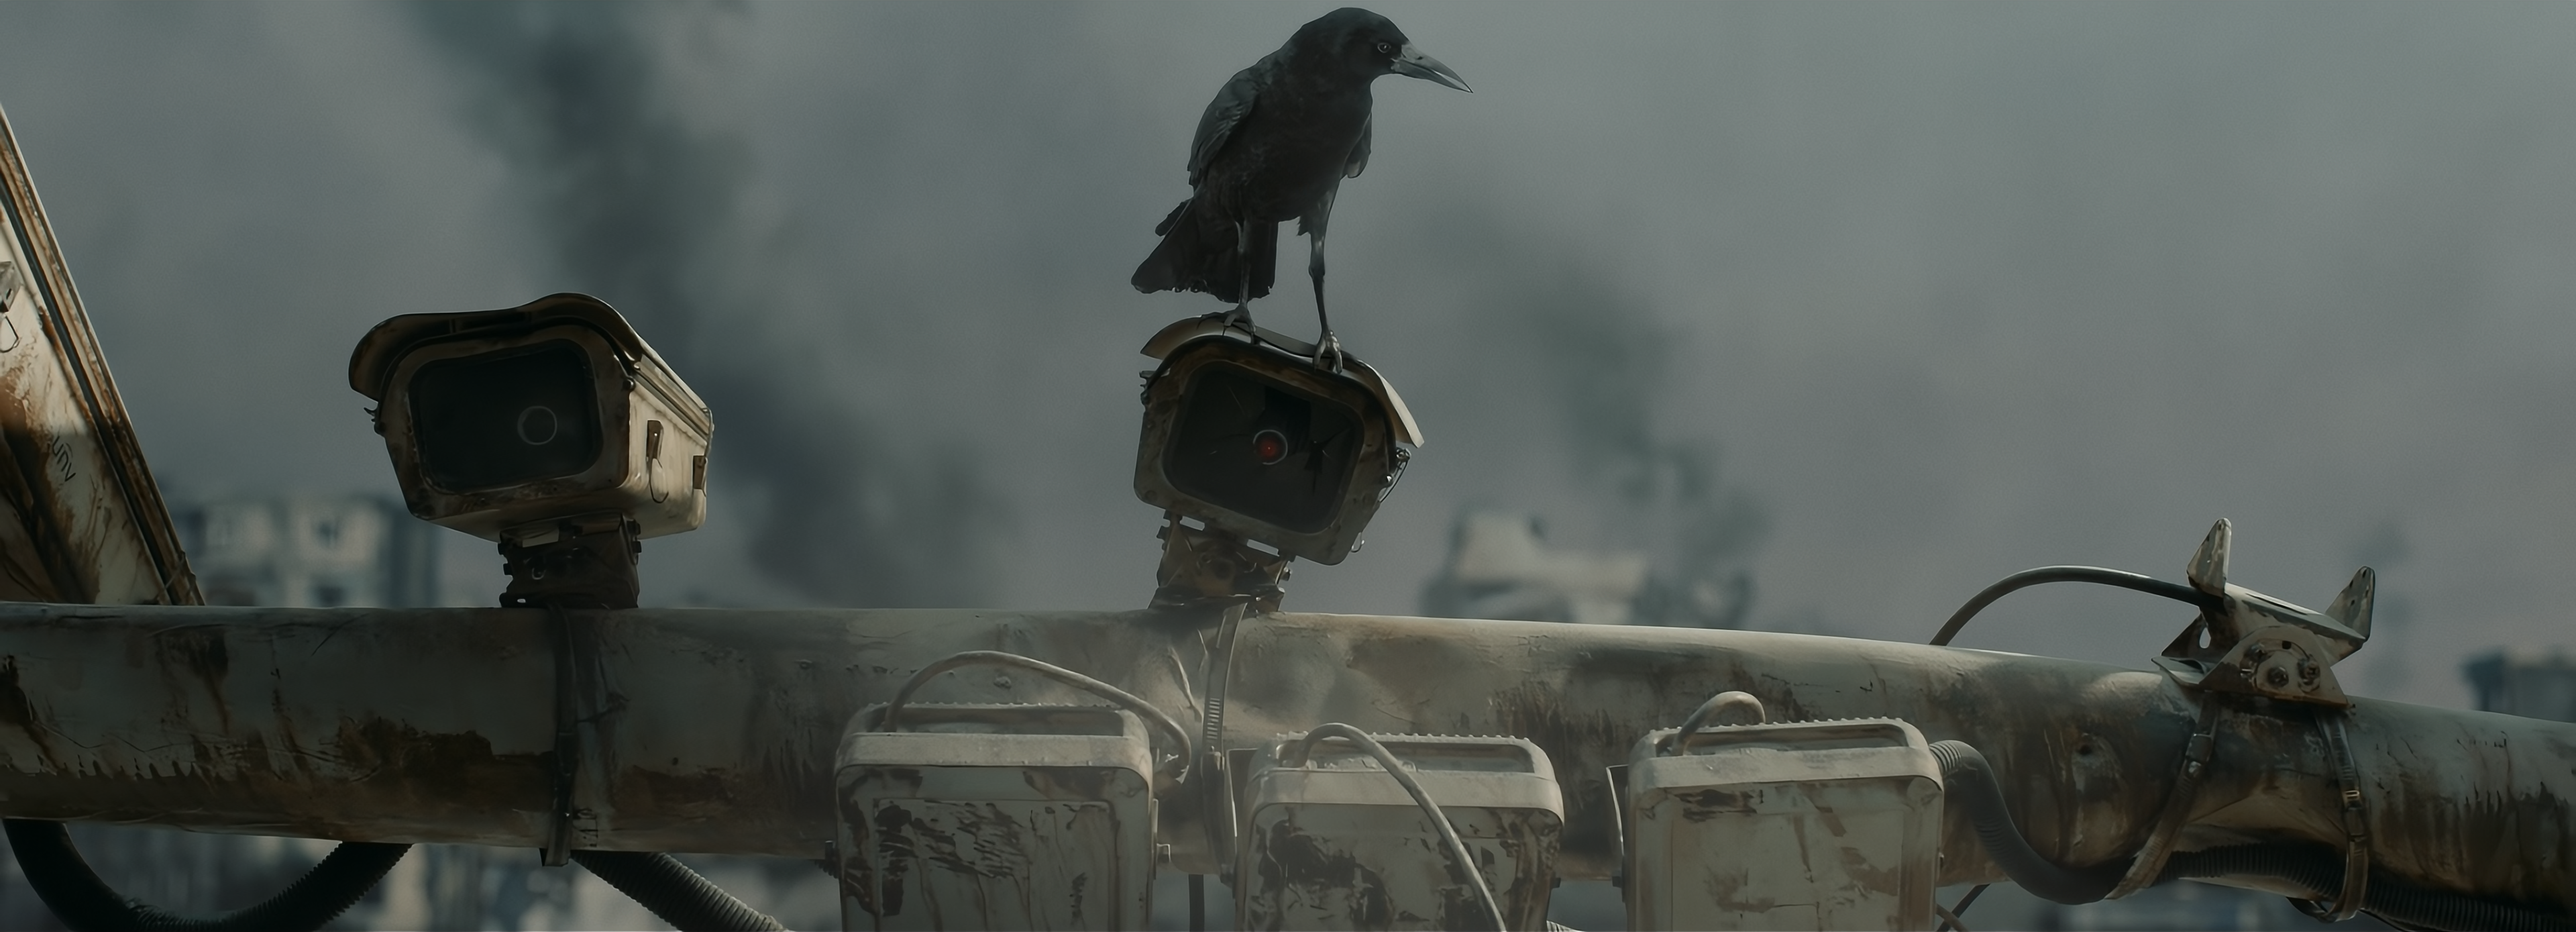 The Wandering Earth 2 Science Fiction Film Stills Technology Raven Birds Animals Smoke 3840x1389